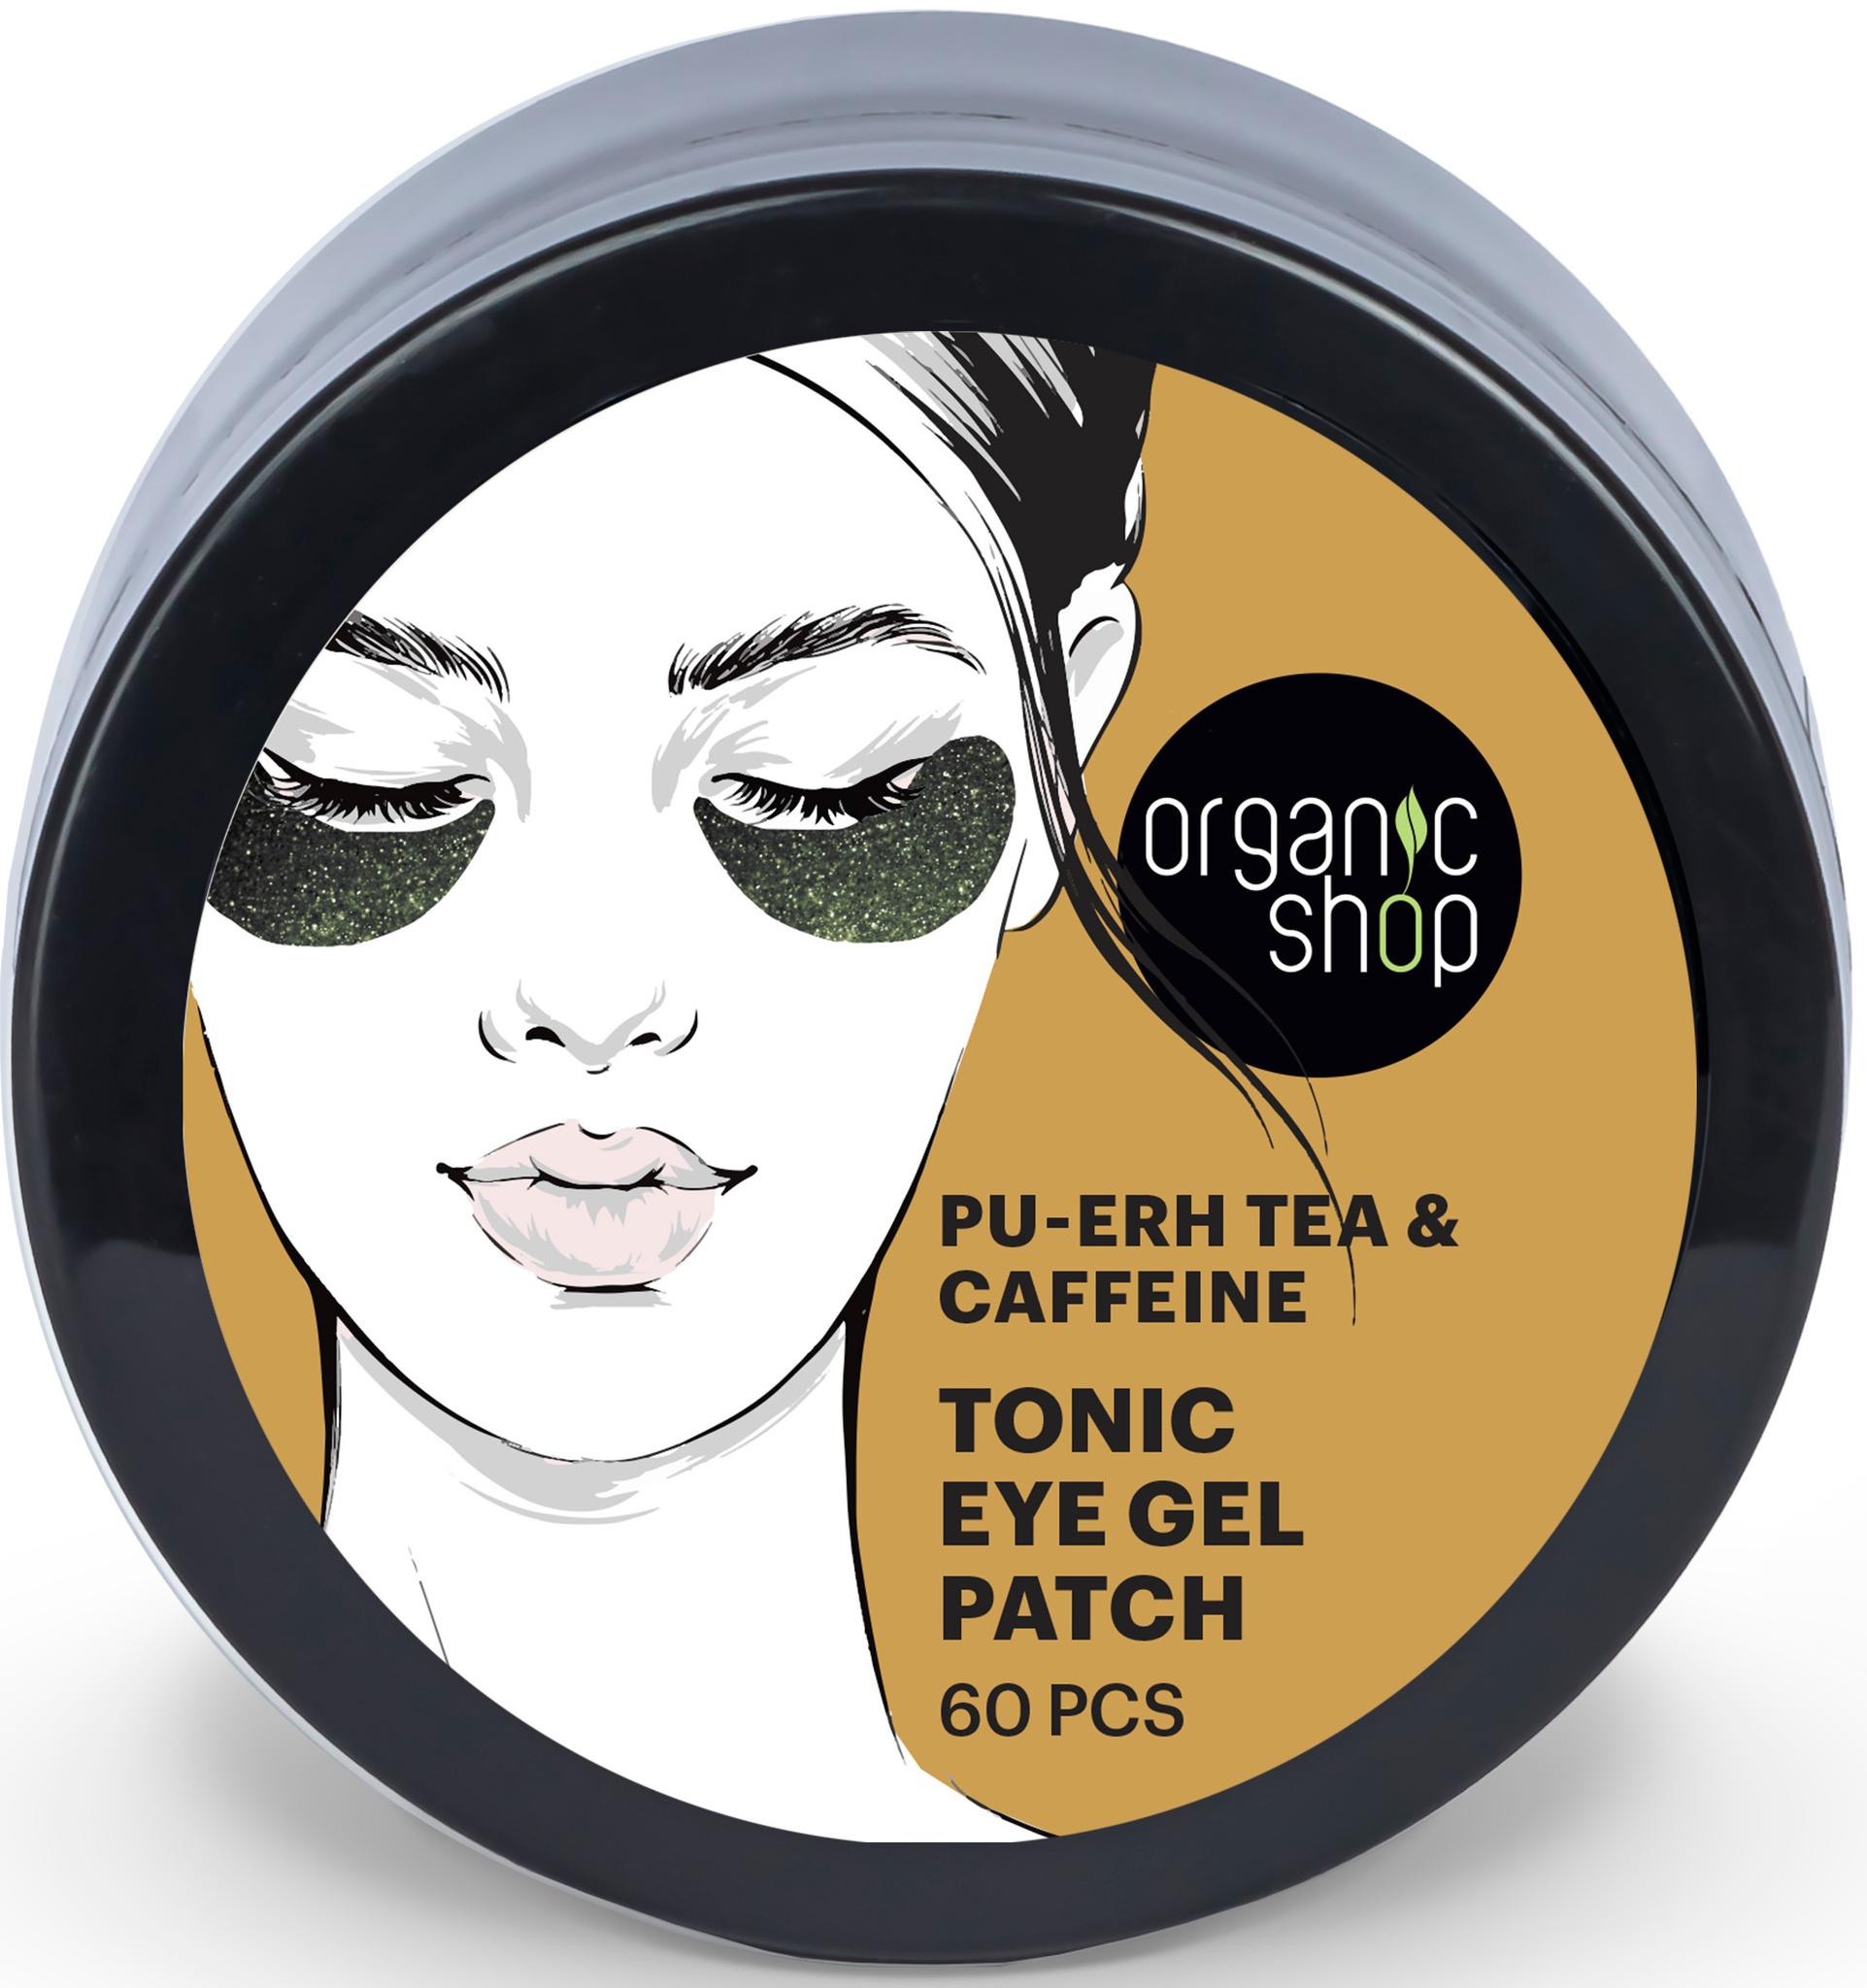 Organic Shop Tonic Eye Gel Patch - Pu-erh Tea & Caffeine